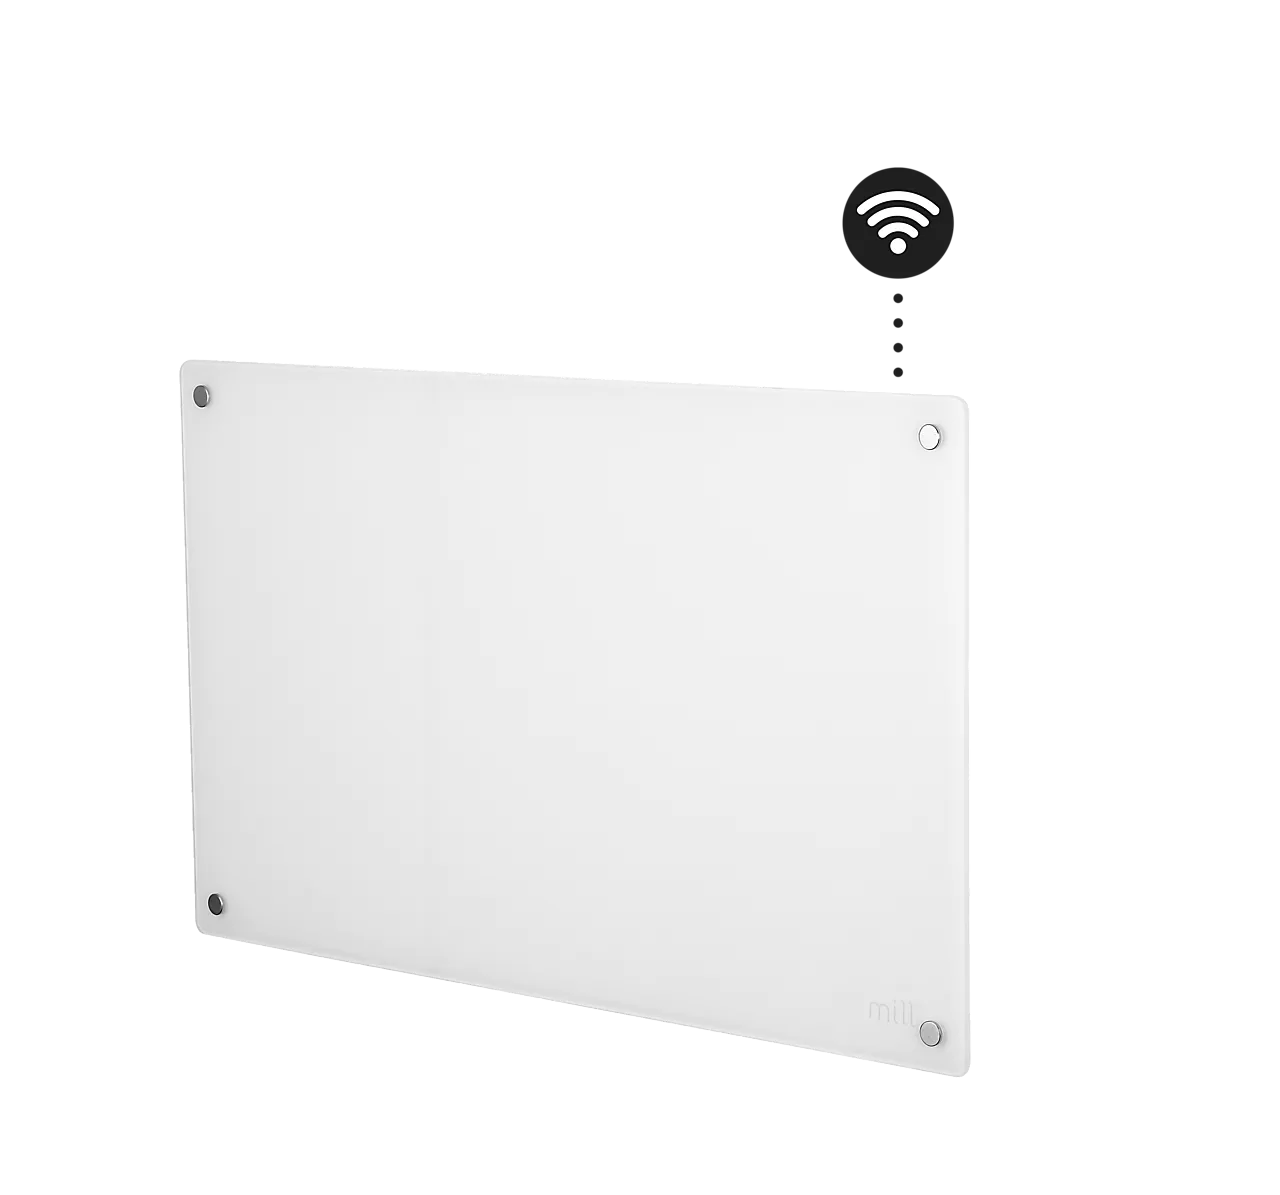 Panelovn hvit glass gen 3 wifi 700 watt null - null - 3 - Miniatyr